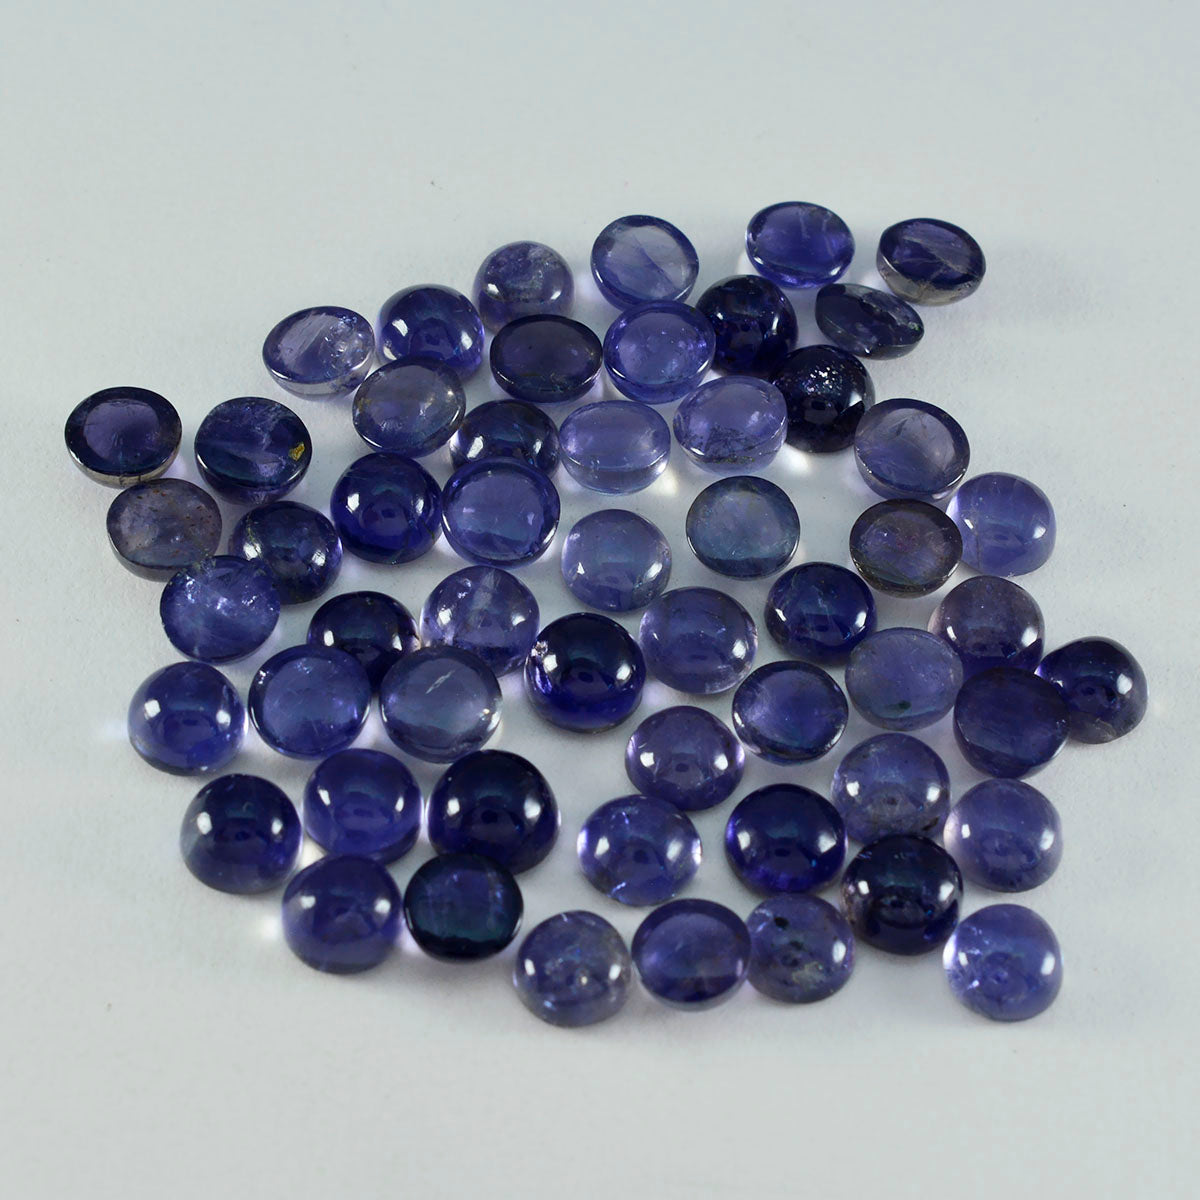 Riyogems 1PC Blue Iolite Cabochon 5x5 mm Round Shape AA Quality Stone